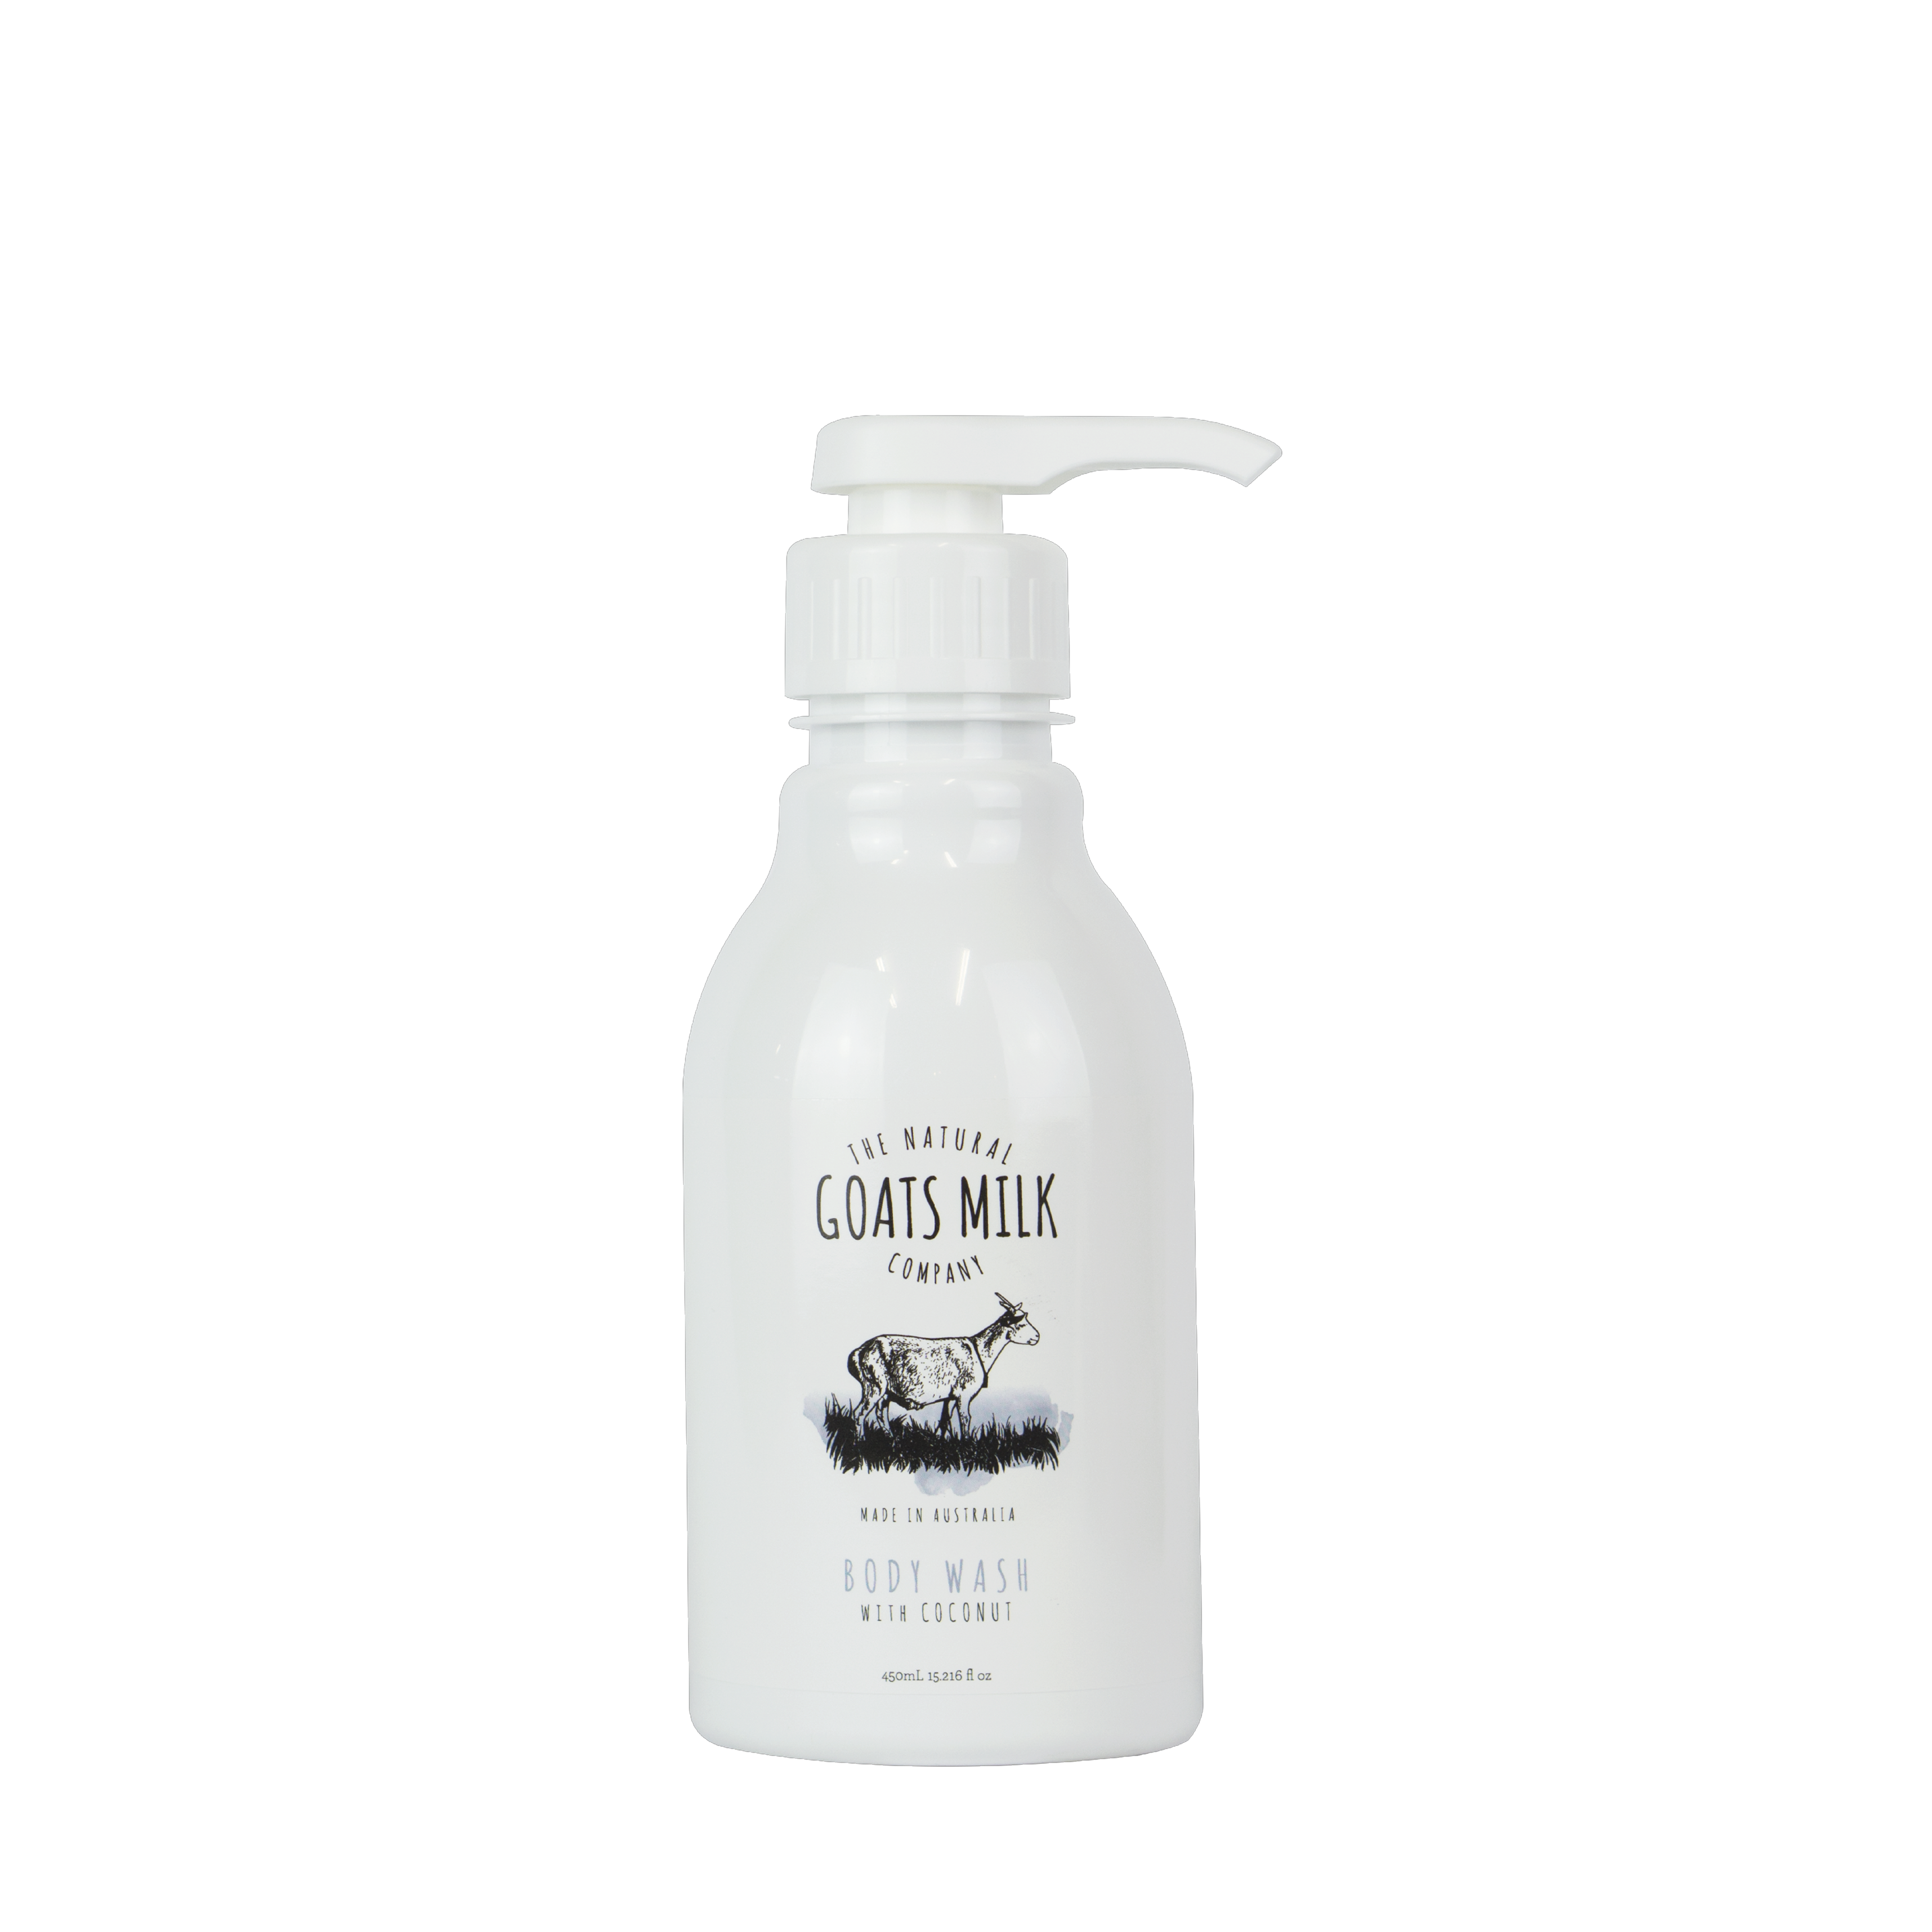 Goats Milk & Coconut Body Wash 450mL – The Natural Goats Milk Co